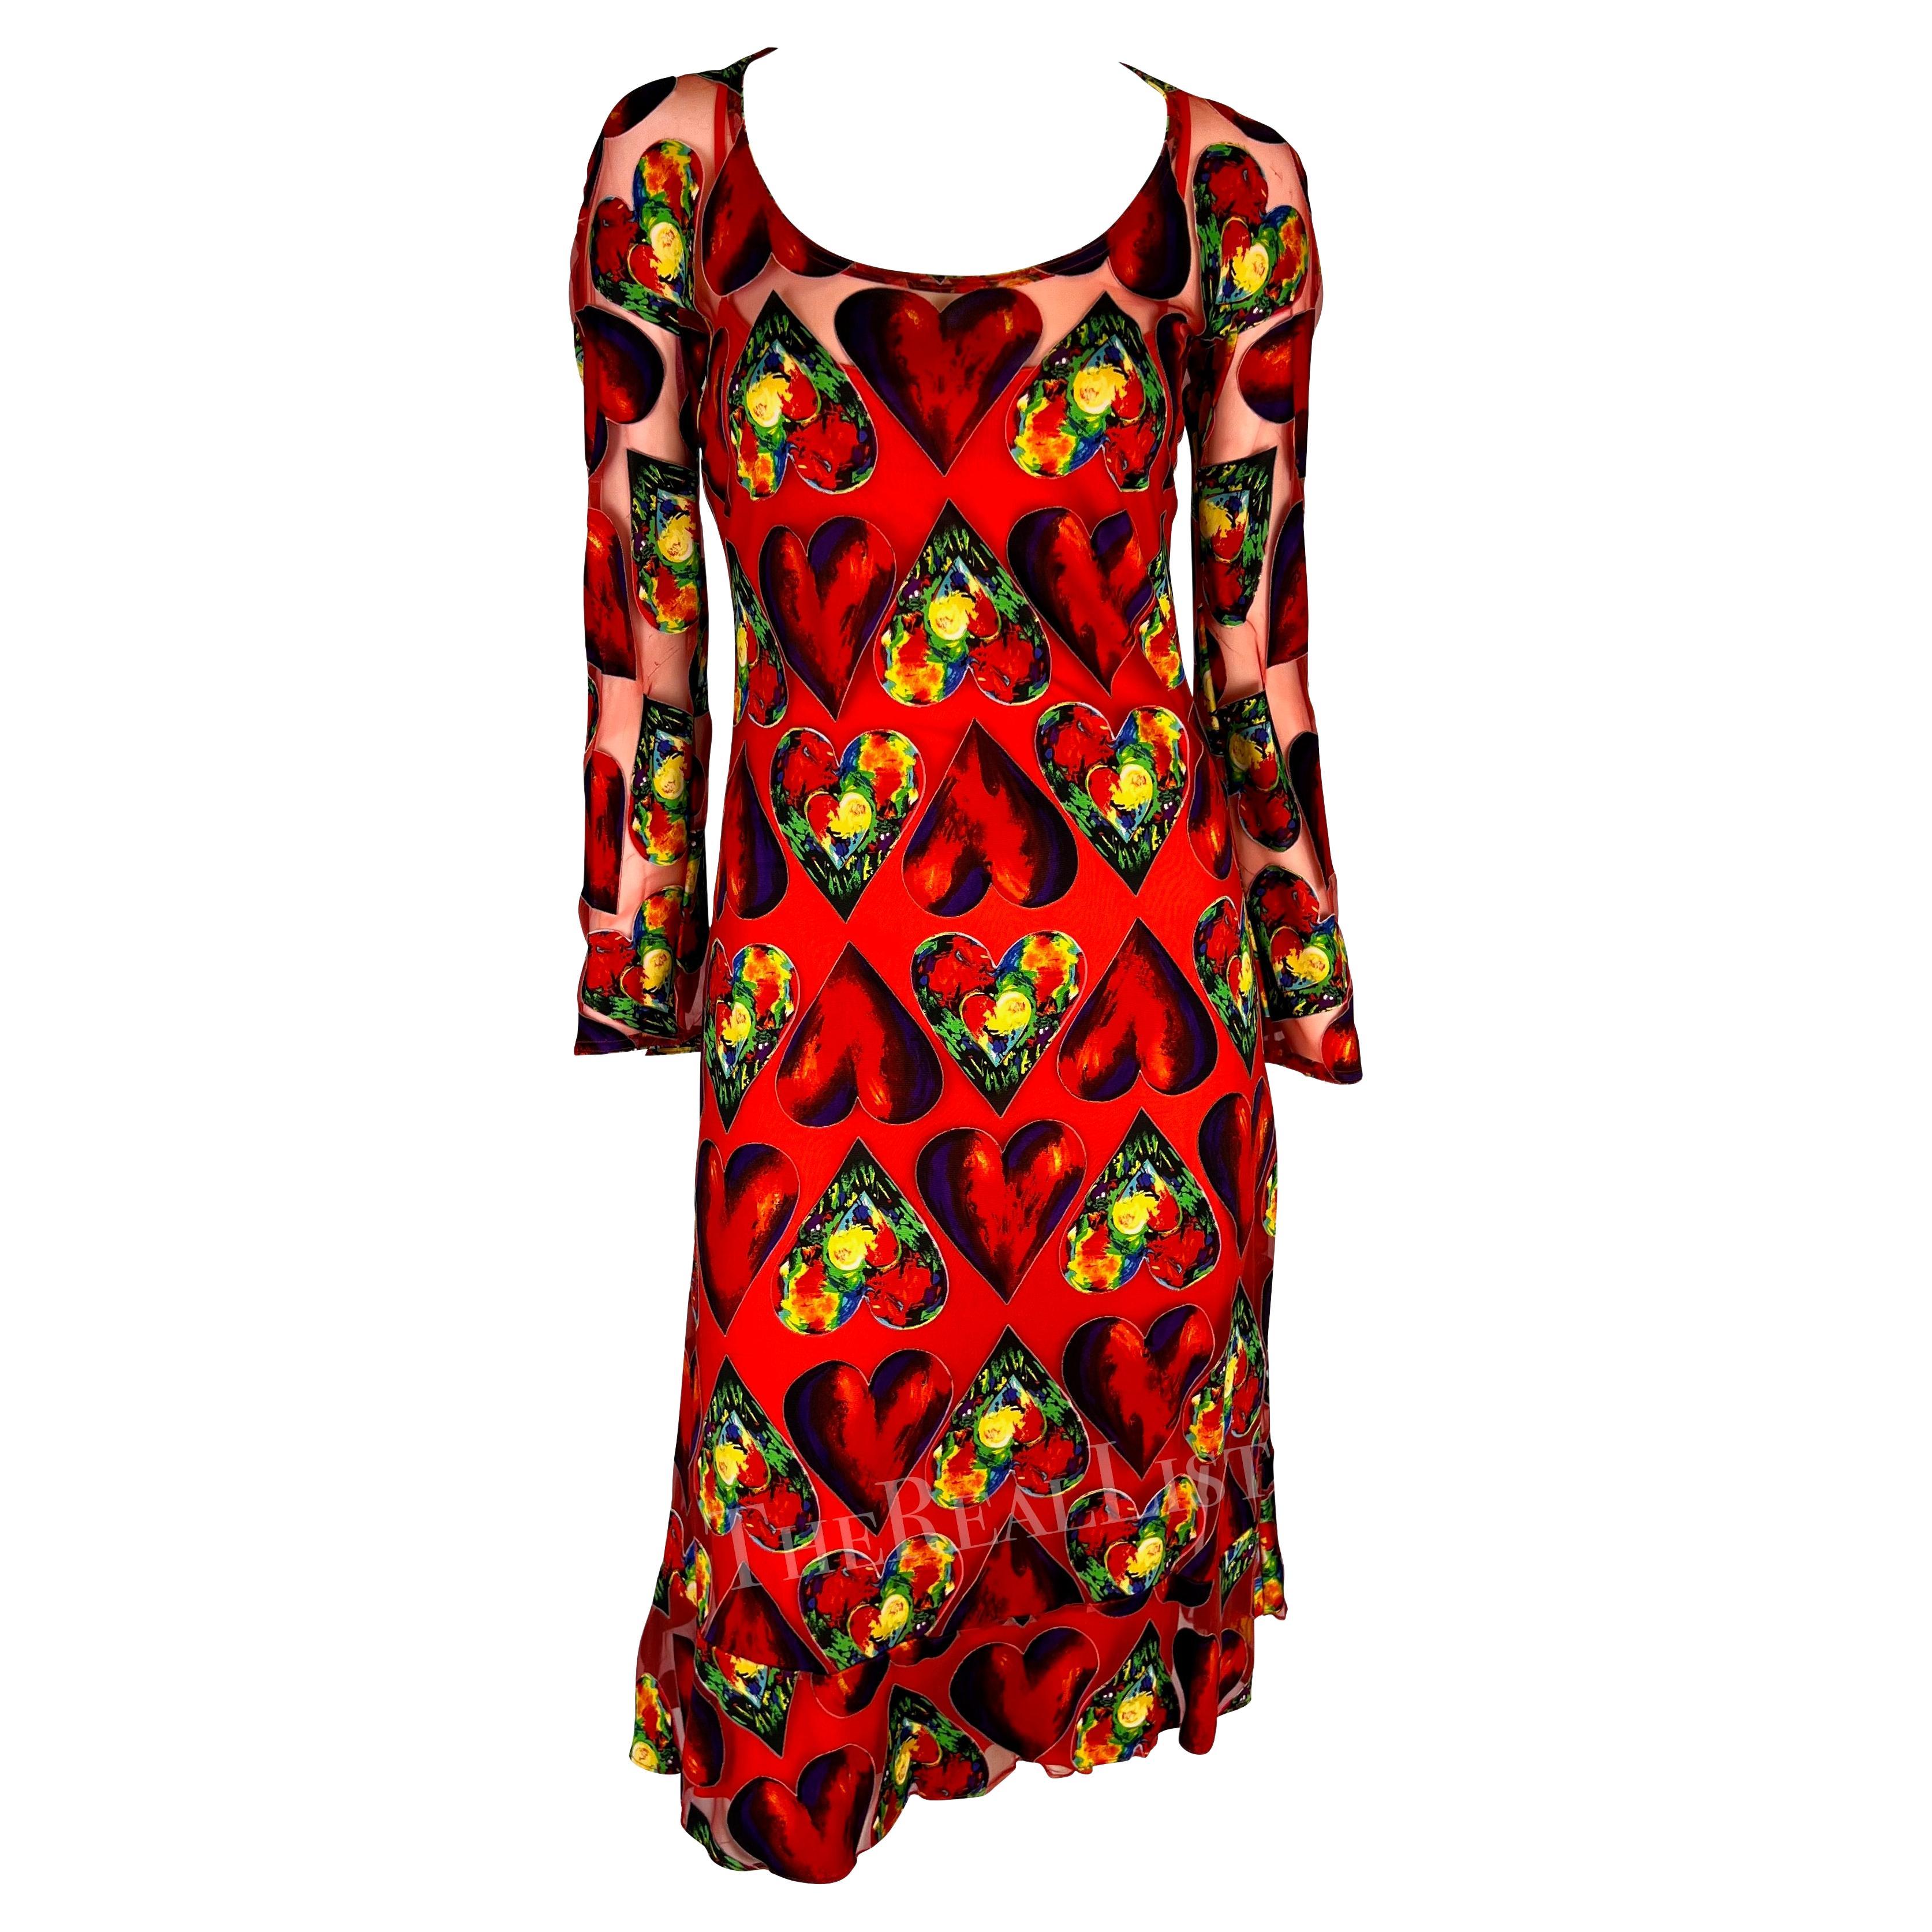 S/S 1997 Gianni Versace Runway Red Sheer Heart Print Bodycon Dress Slip Set For Sale